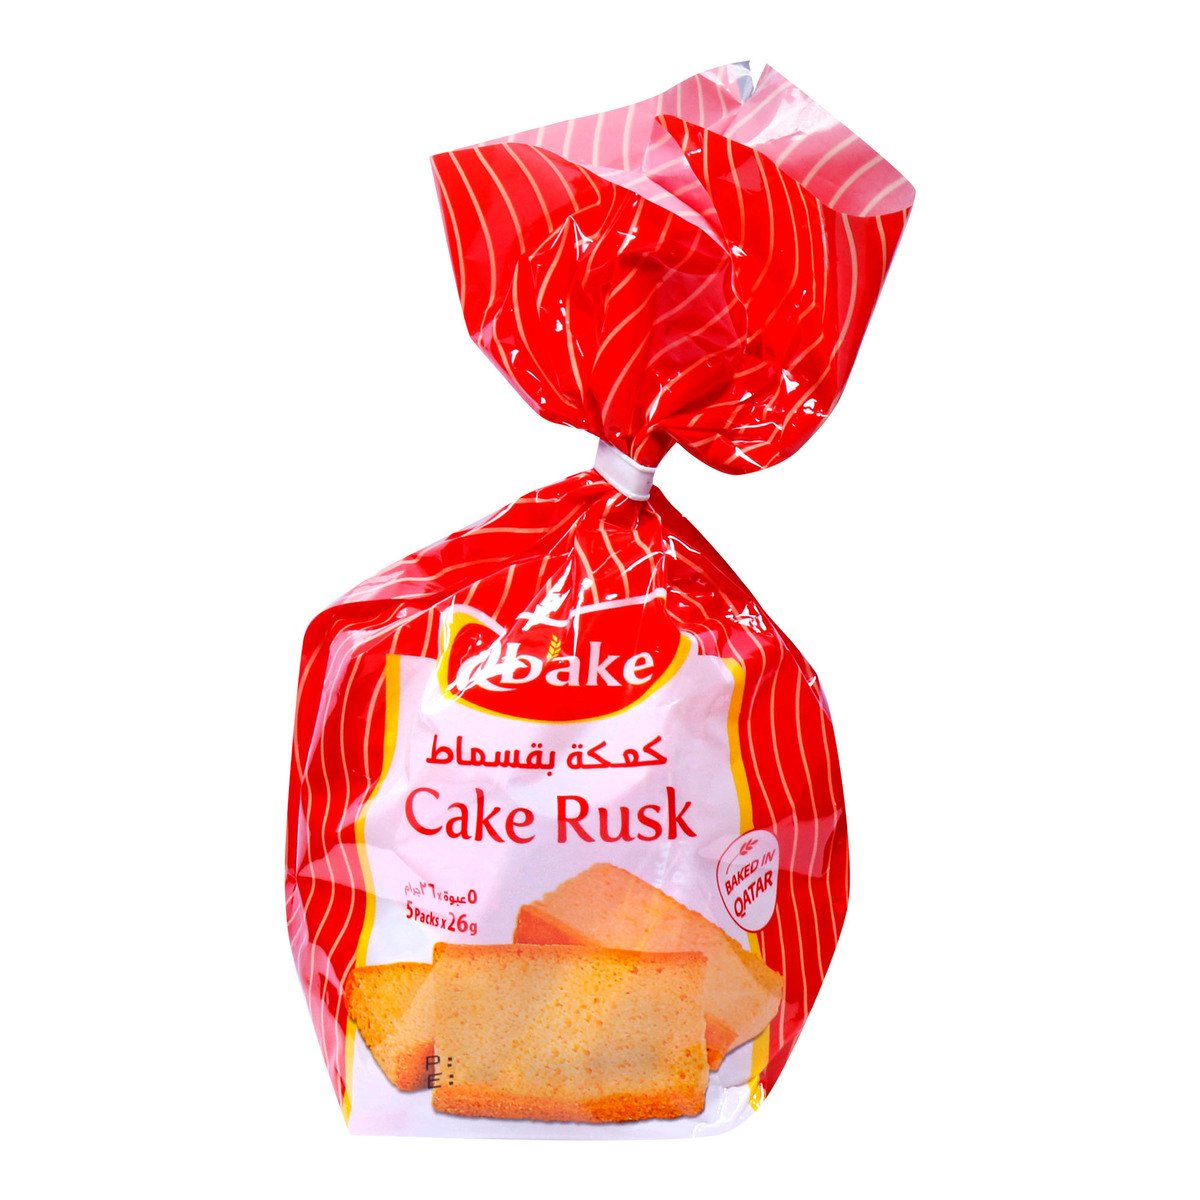 Qbake Cake Rusk 5 x 26g